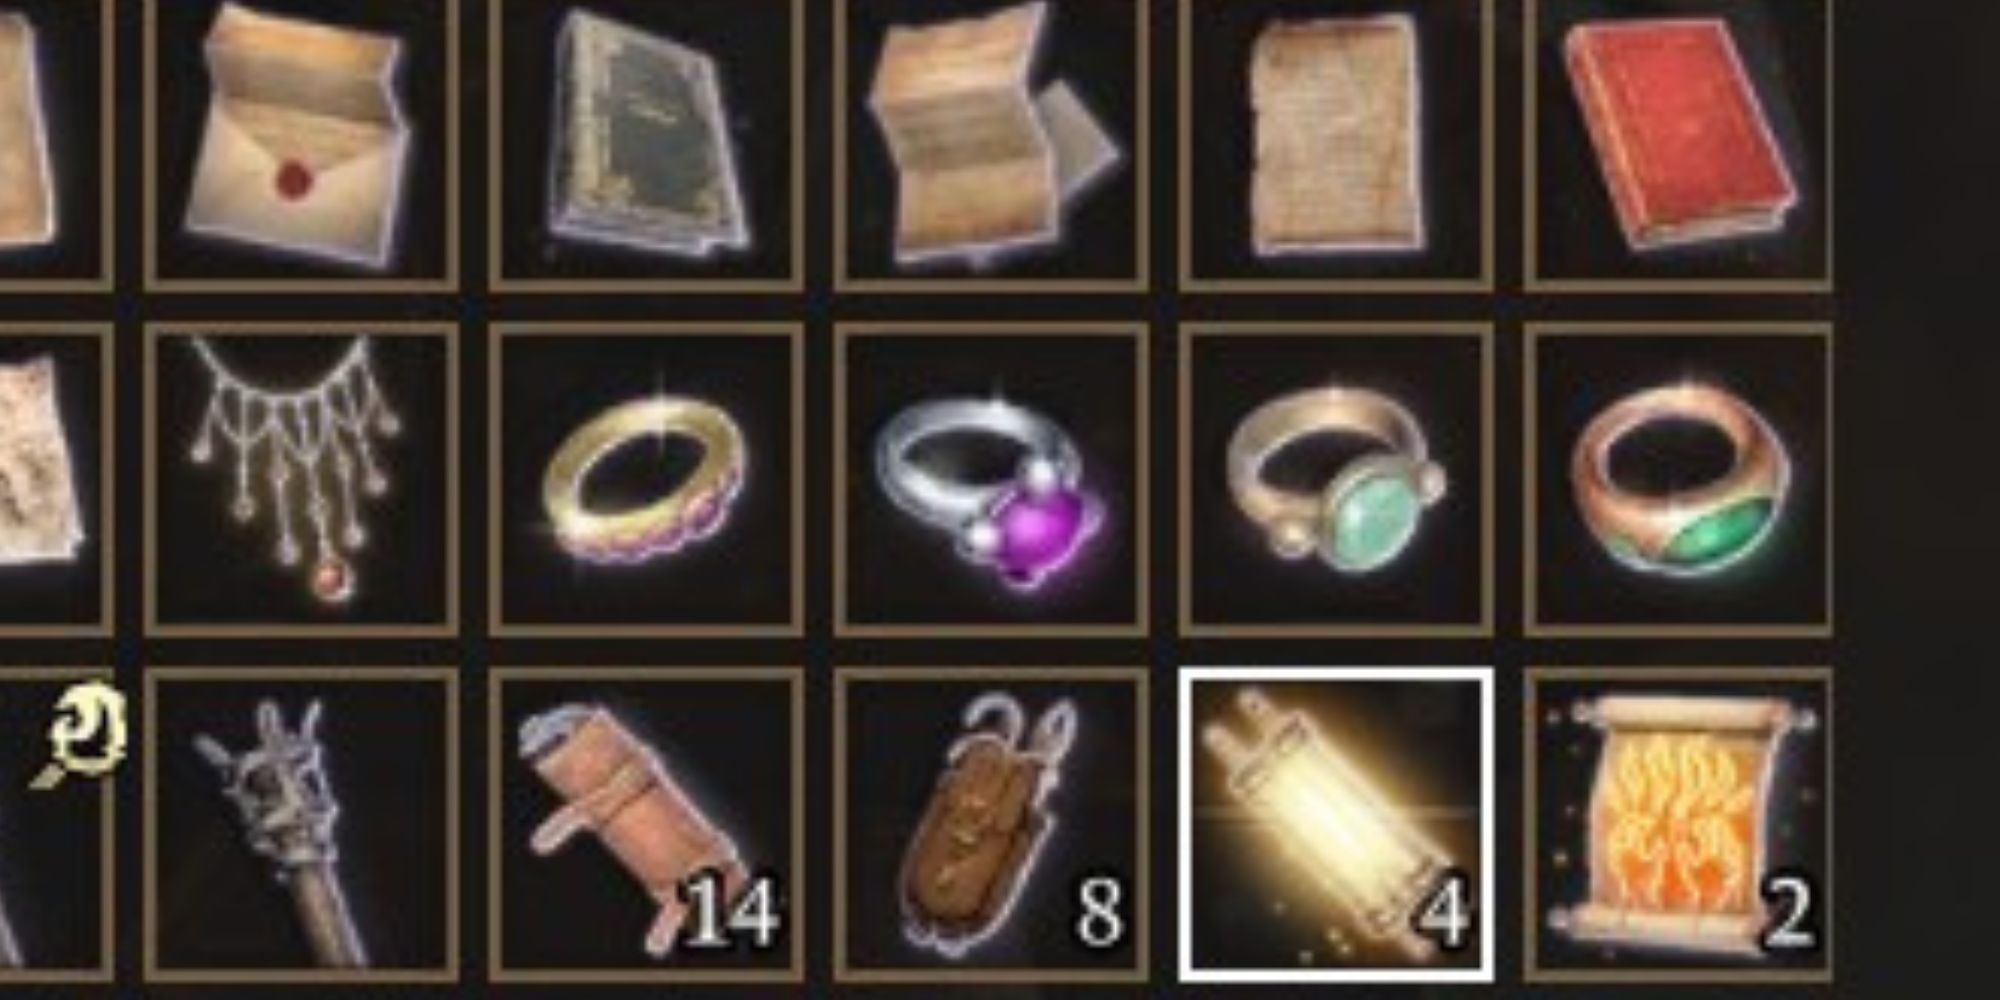 An assortment of rings in Baldur's Gate 3